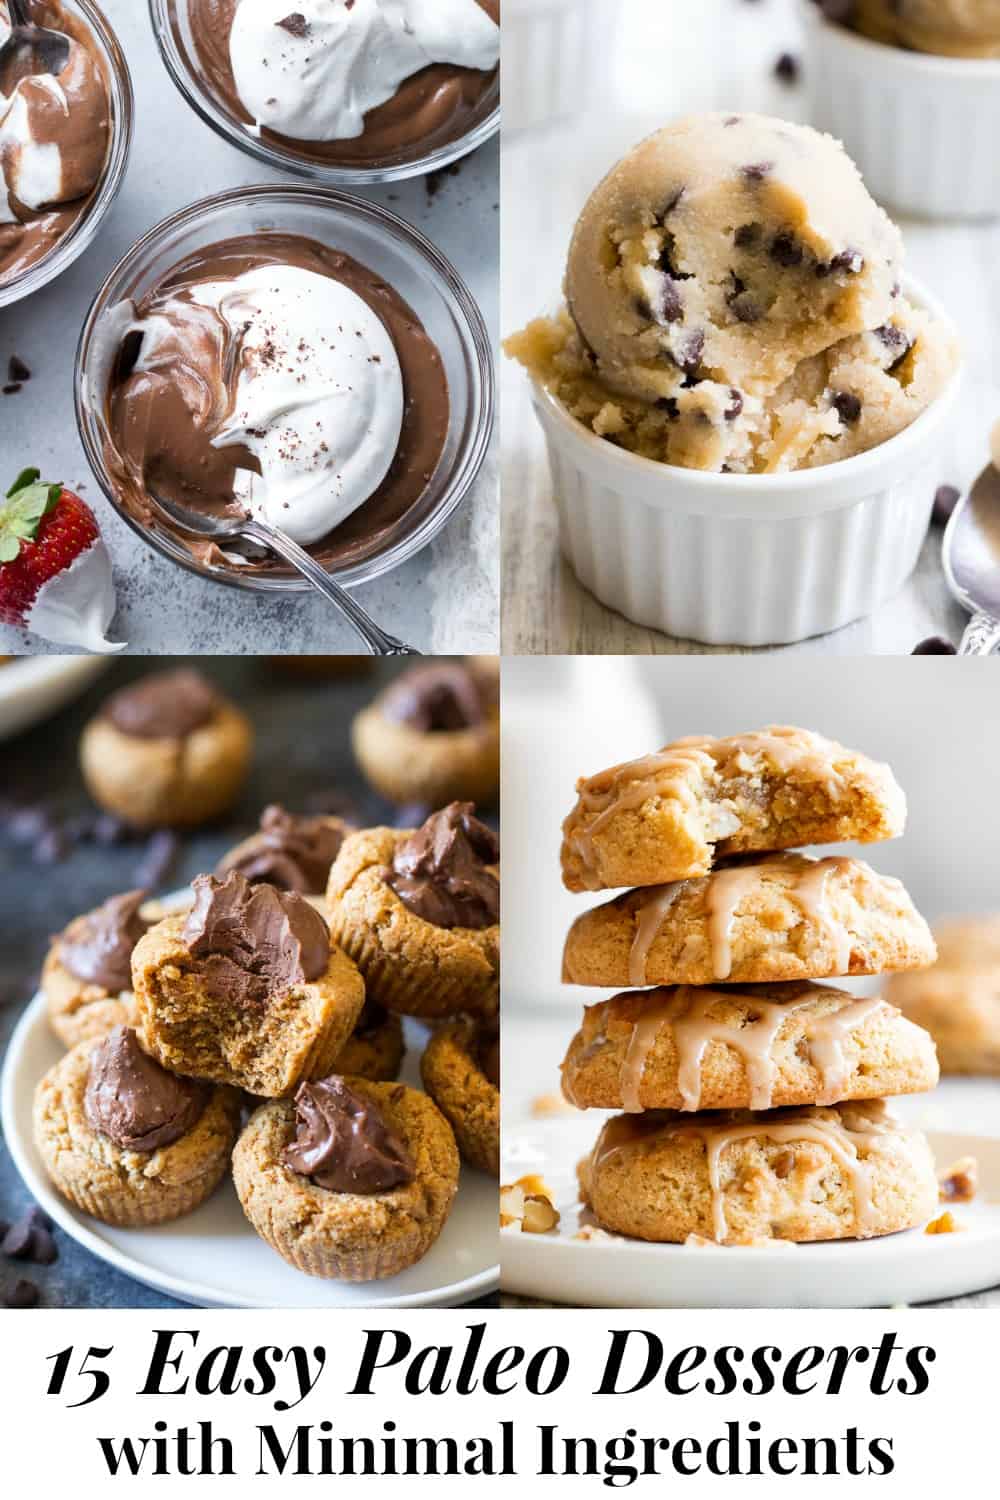 https://www.paleorunningmomma.com/wp-content/uploads/2020/03/15-easy-paleo-desserts-2.jpg